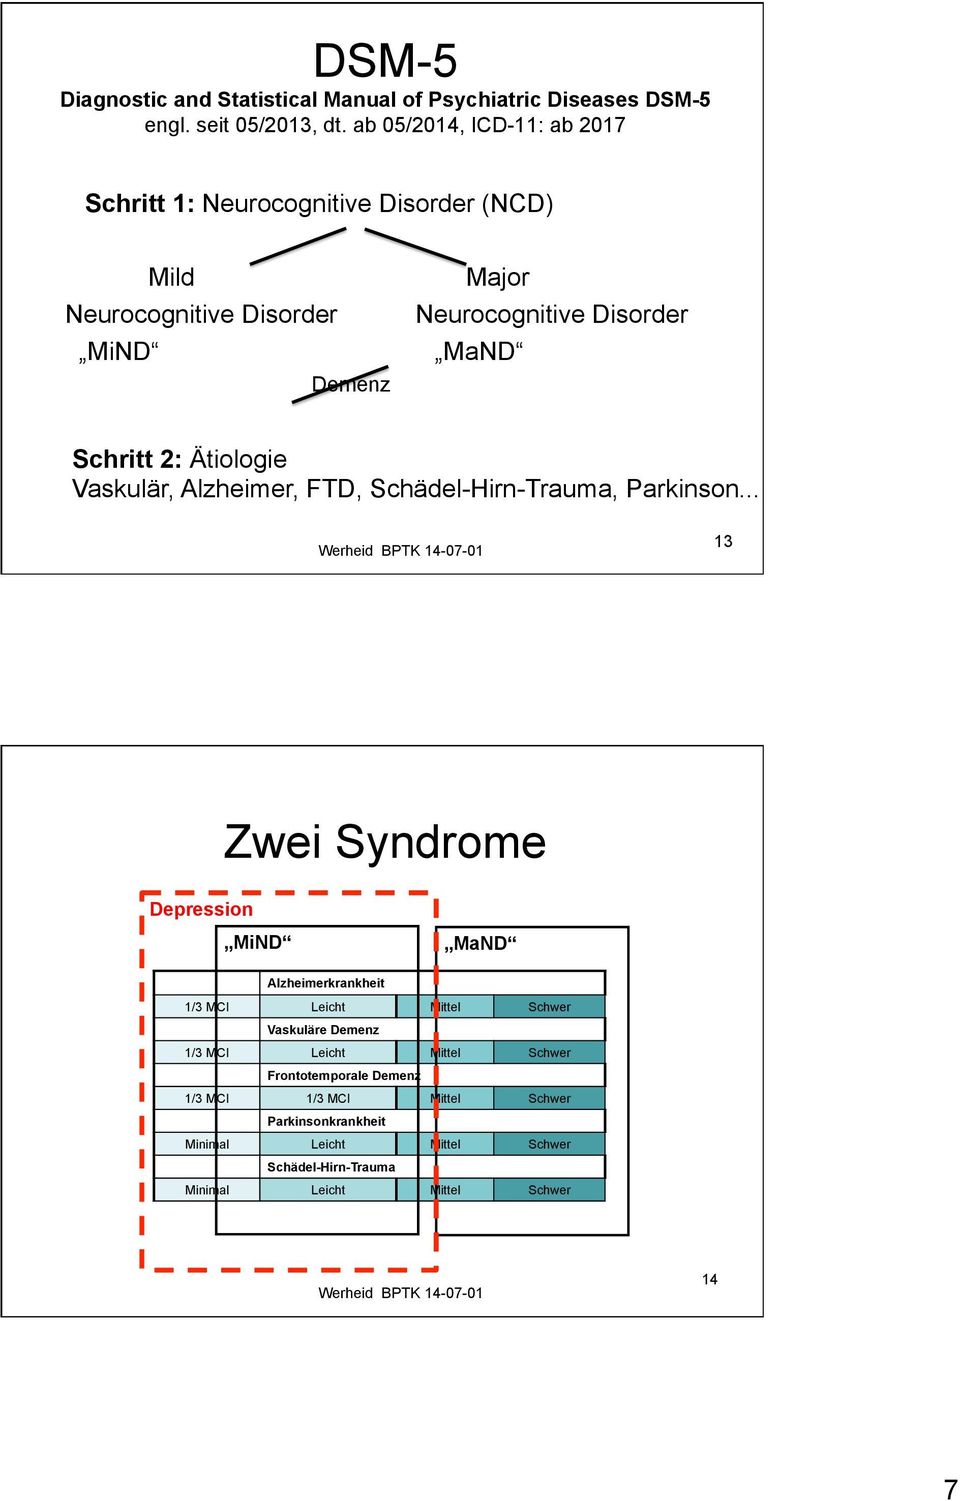 Schritt 2: Ätiologie Vaskulär, Alzheimer, FTD, Schädel-Hirn-Trauma, Parkinson.